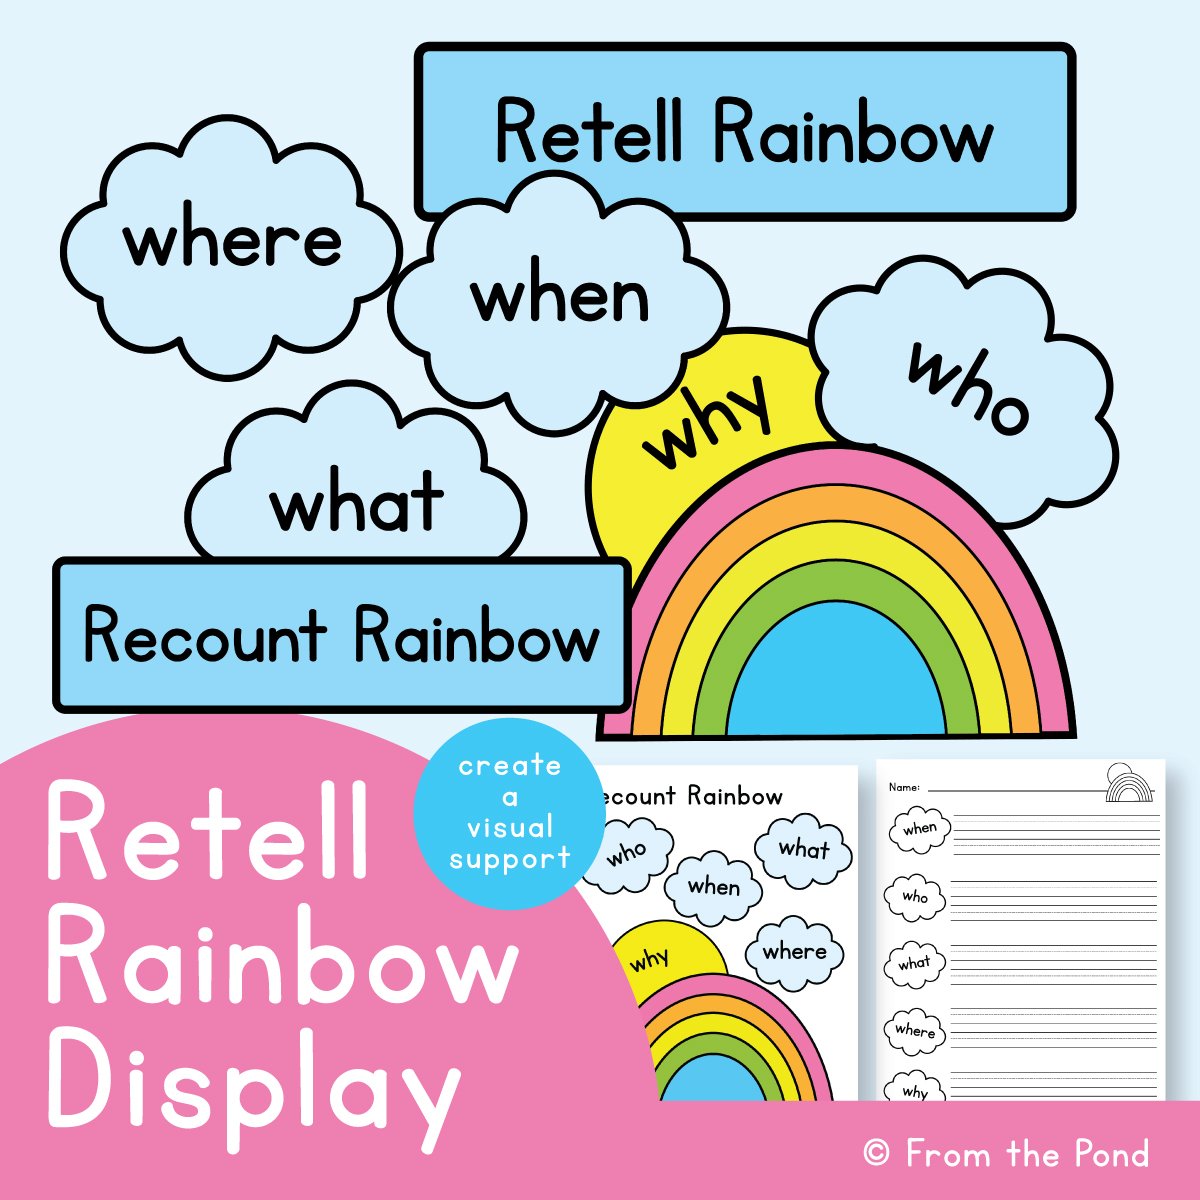 Retell Rainbow Display